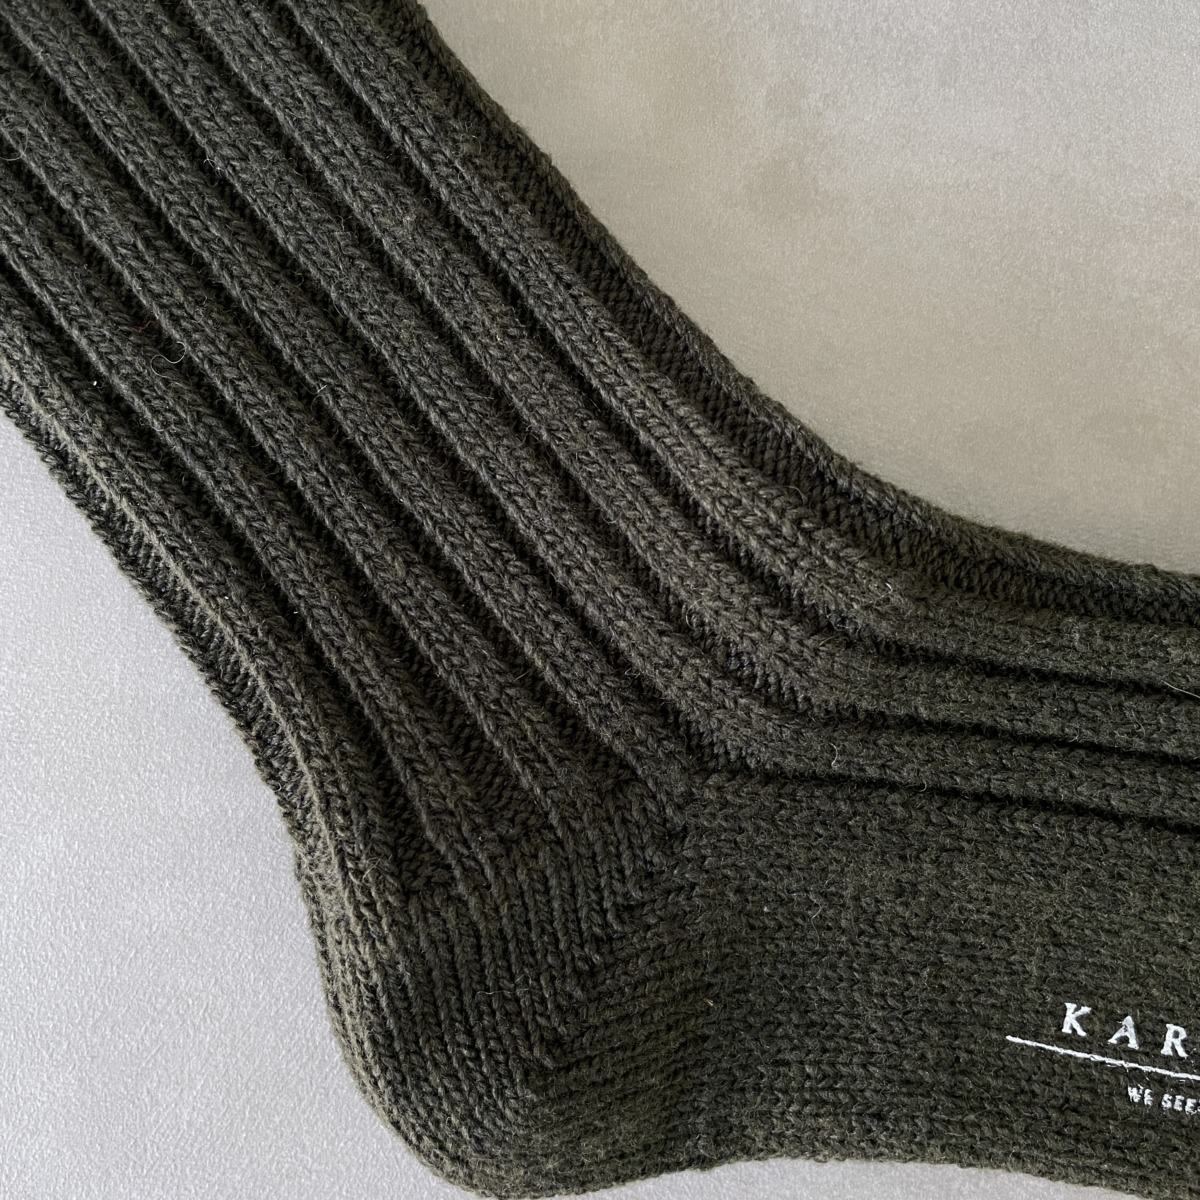 KARMAN LINE LIBRA / Socks / Ebony / 24-26cm